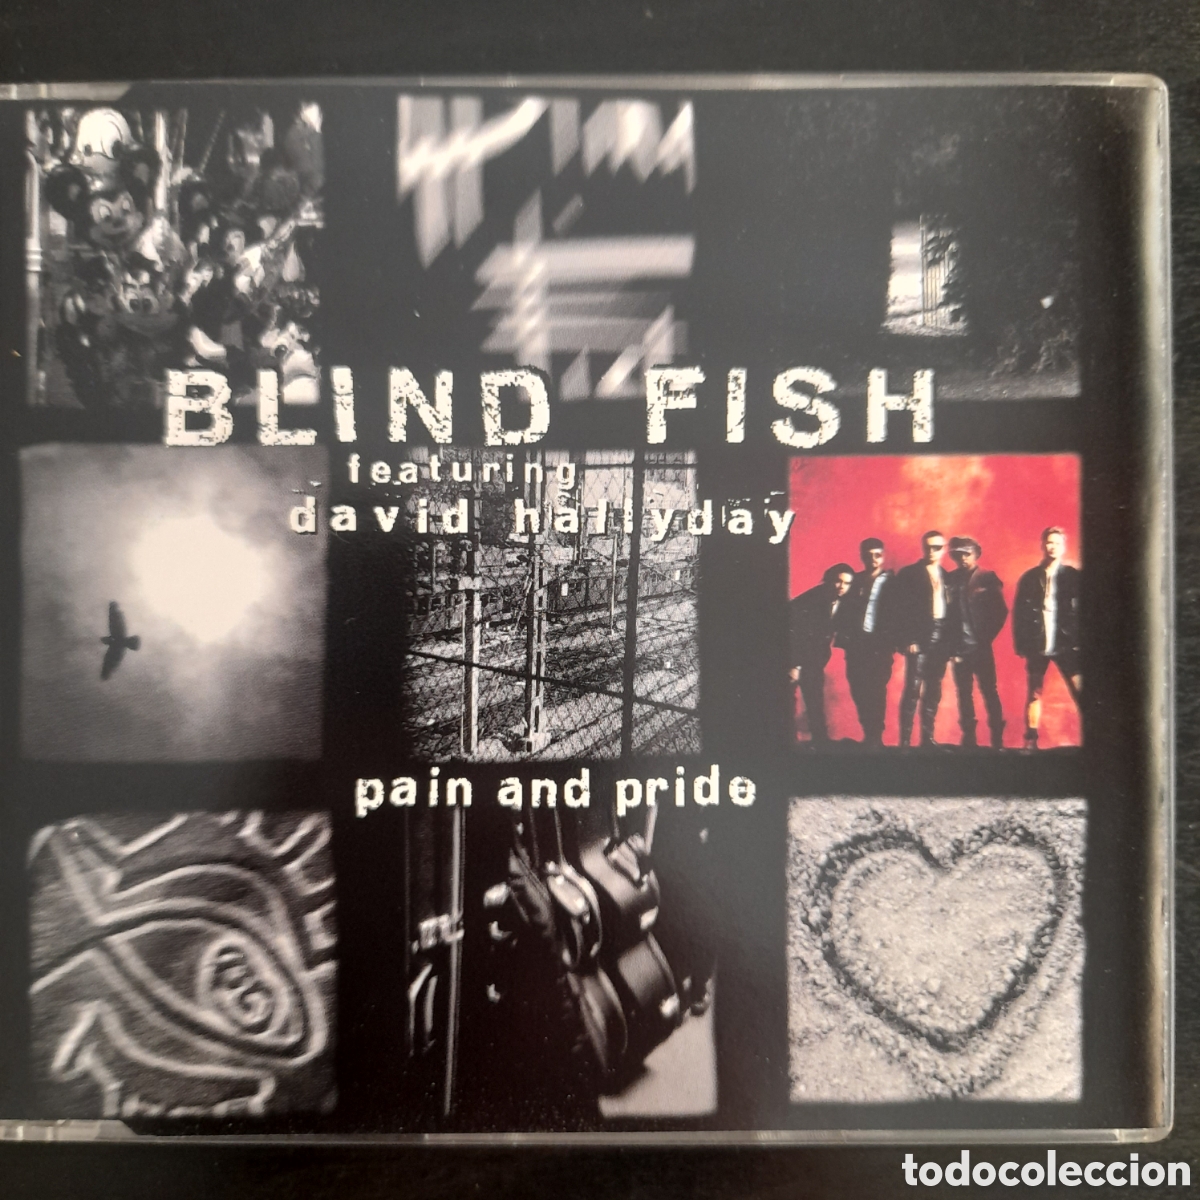 blind fish featuring david hallyday – pain and - Acheter CD de musique rock  sur todocoleccion